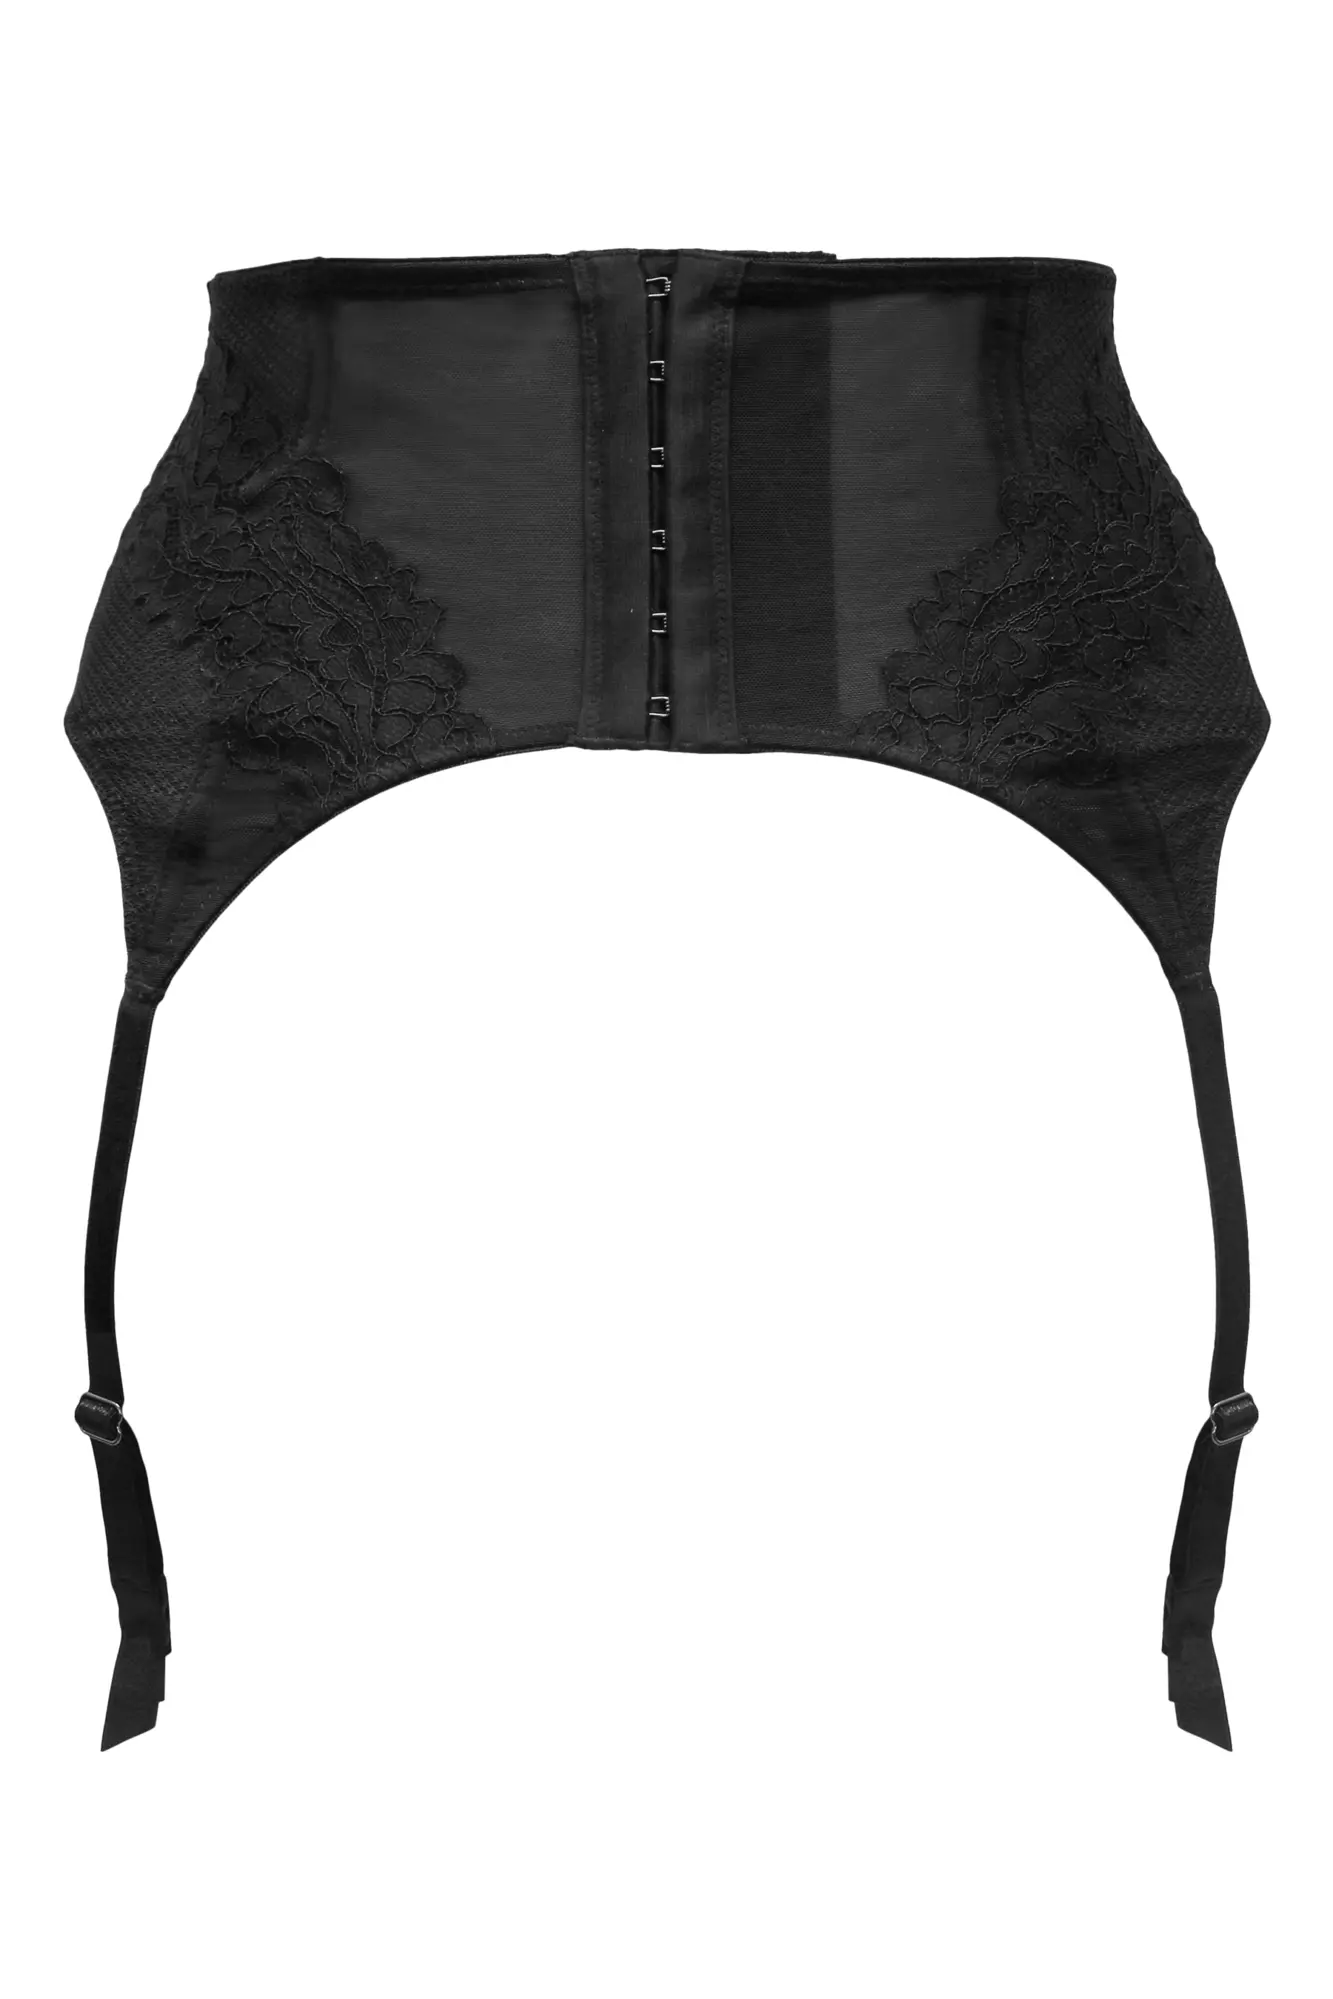 Women's Plus Size Silver Satin Longline Bra Panty and Garter Set - Black